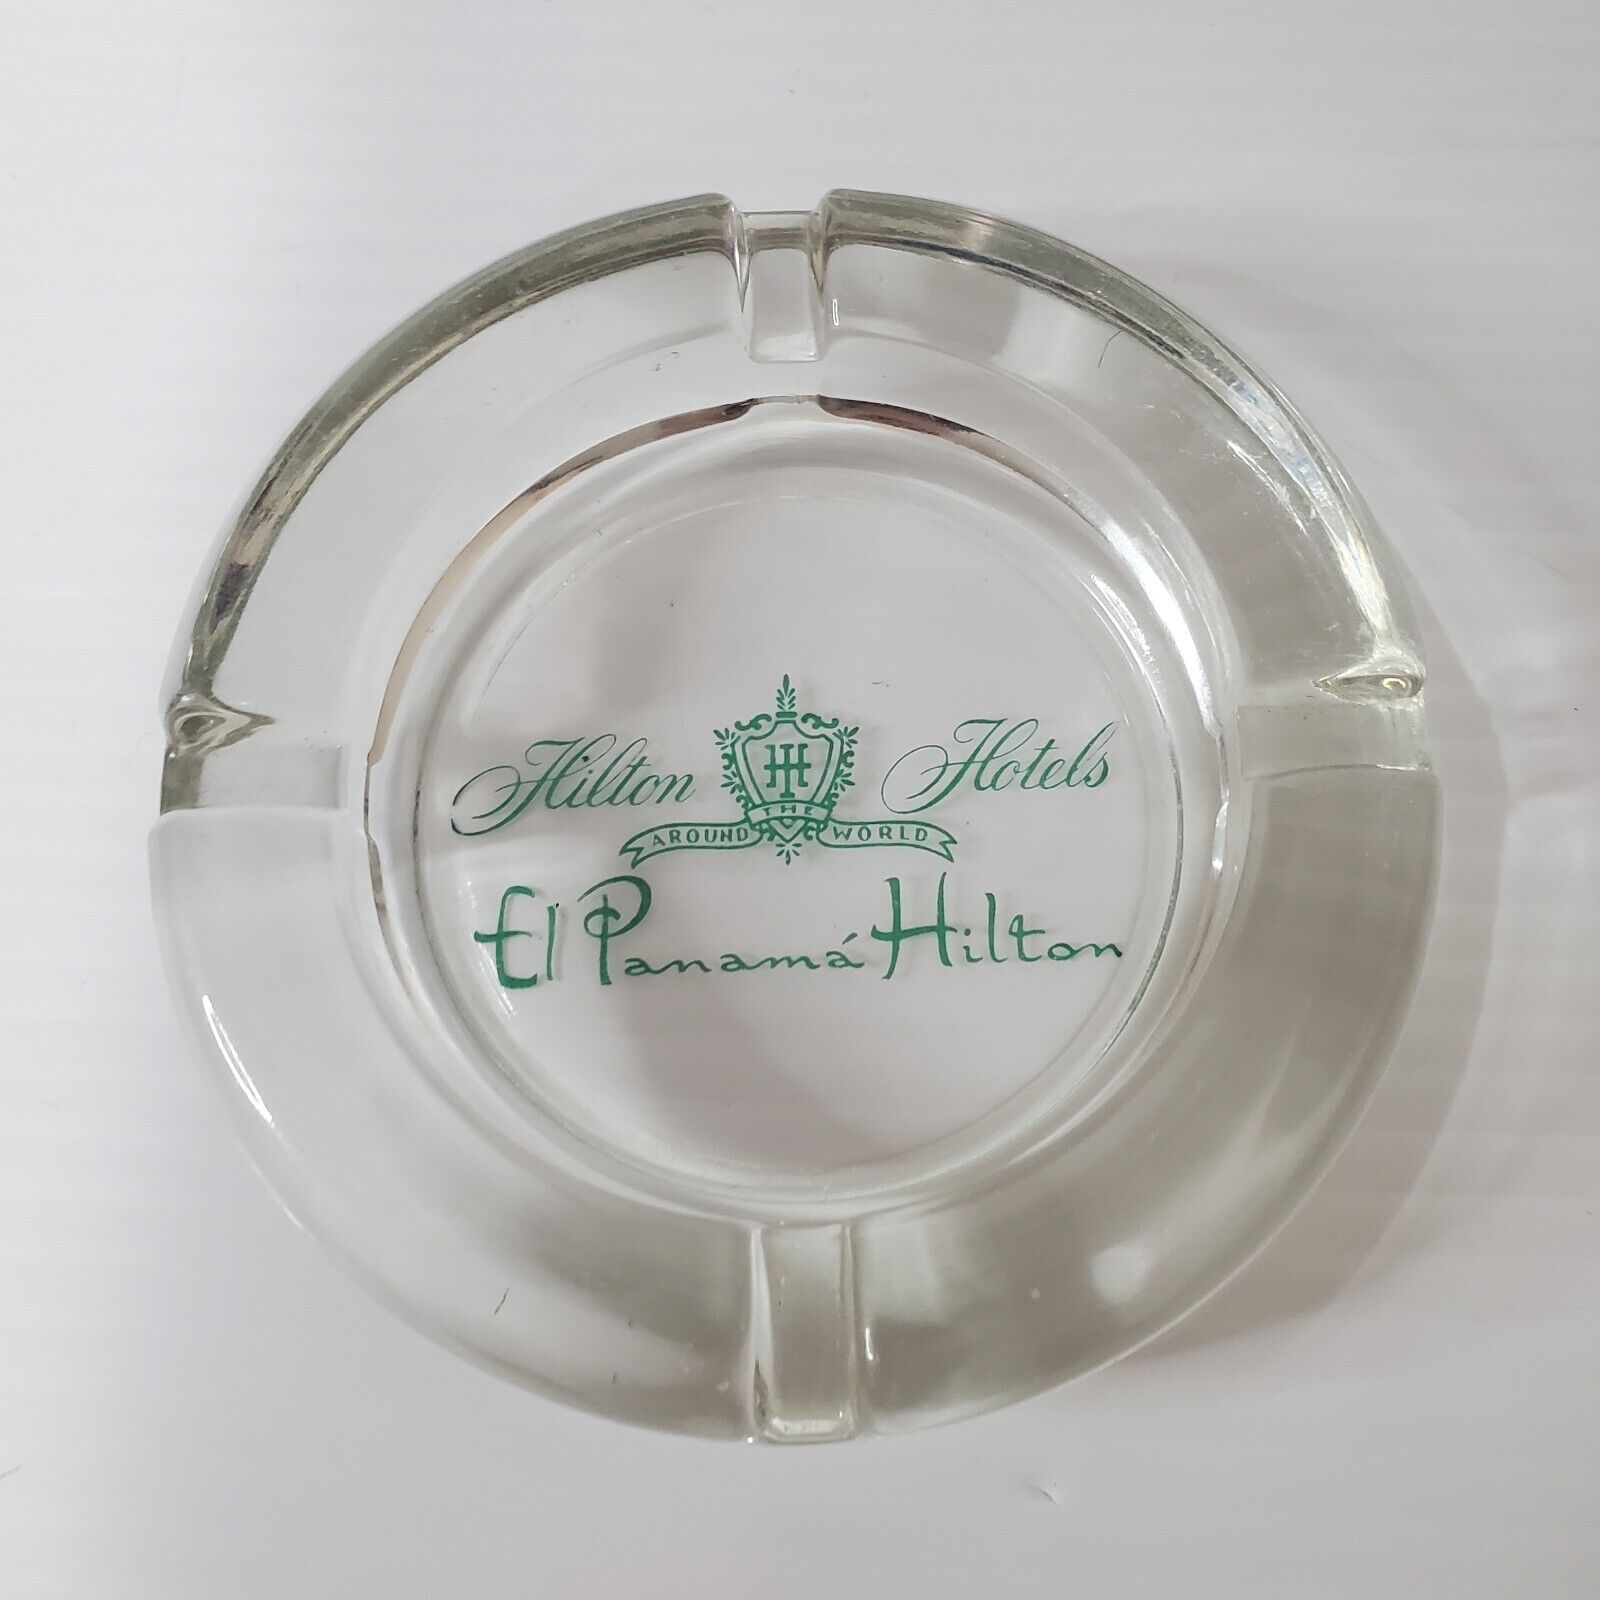 Vintage EL Panama City Hilton Hotel Glass Ash Tray Smoking A Round The World 